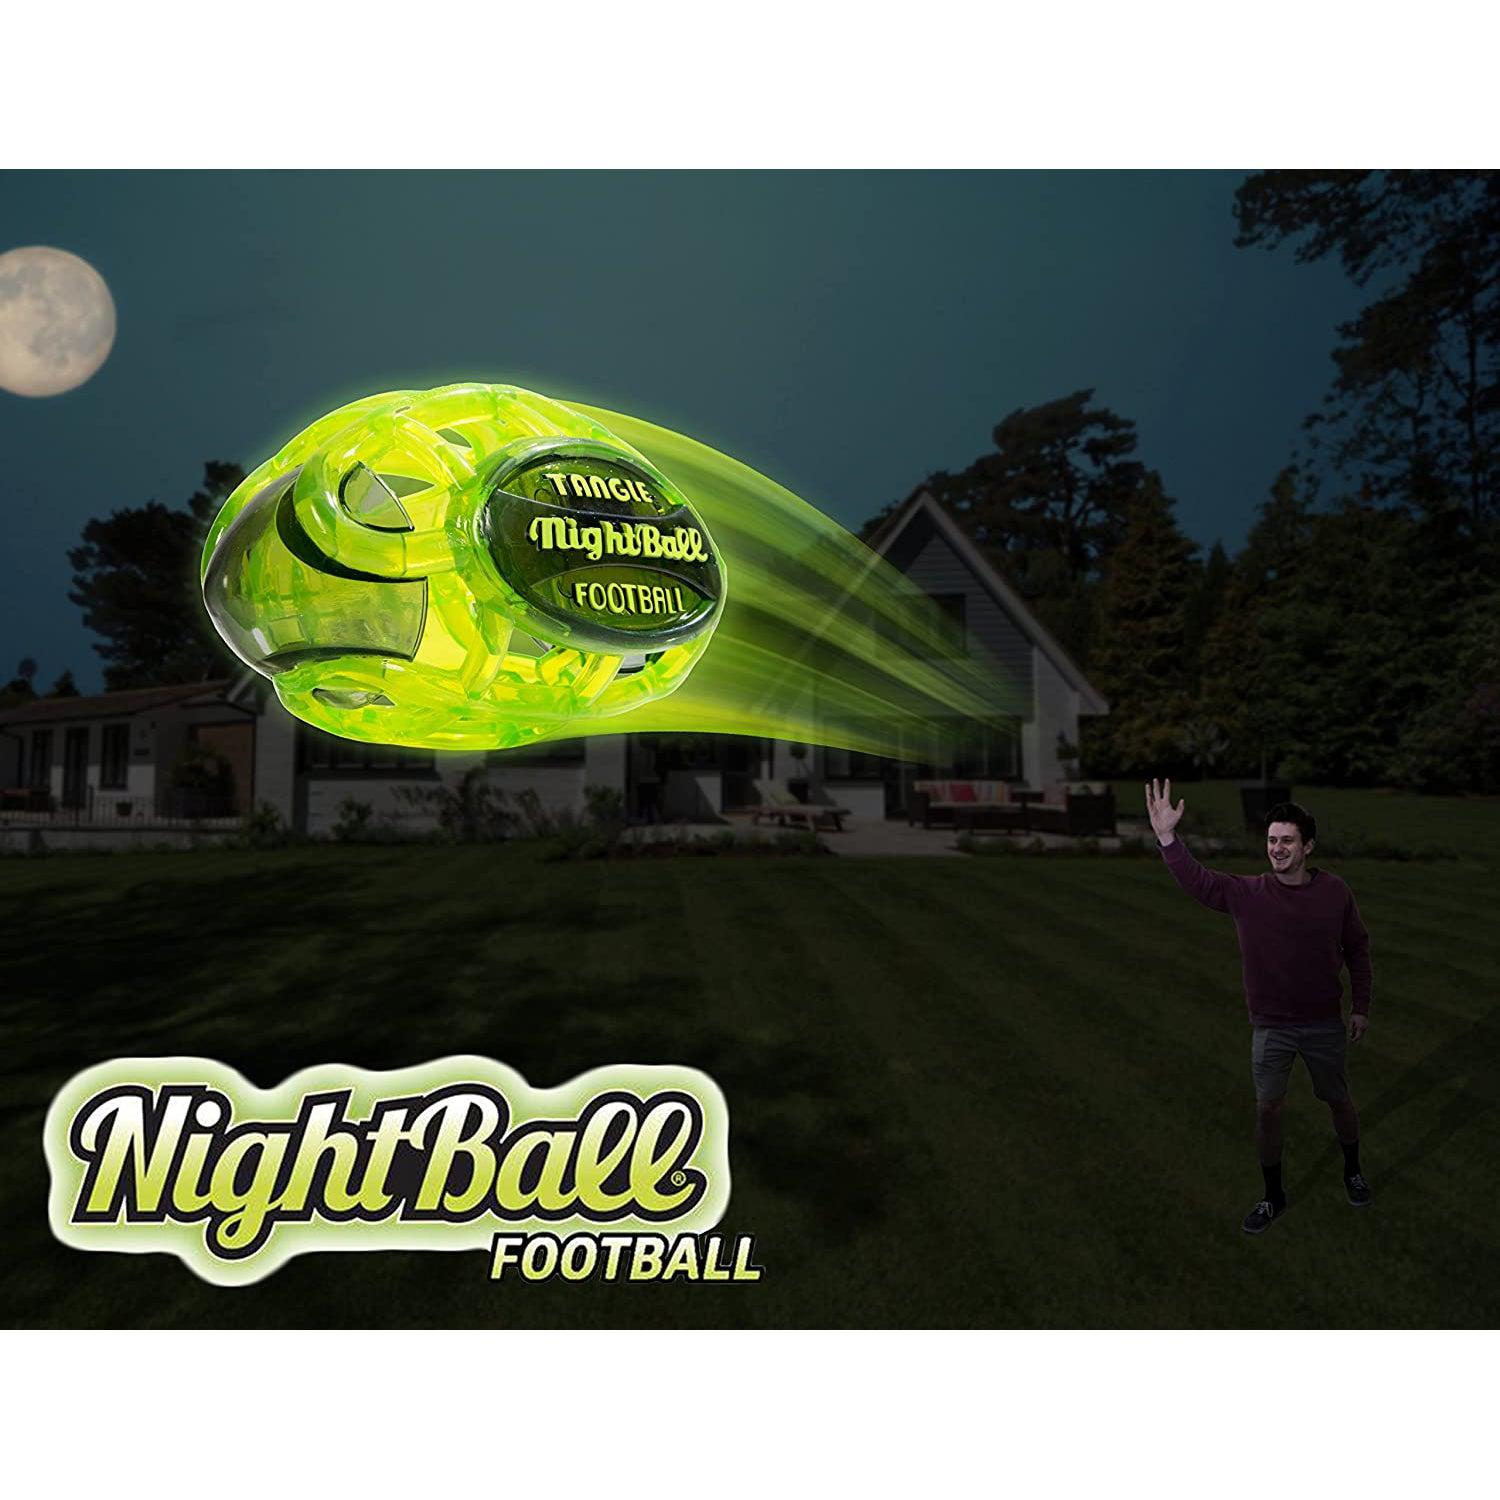 Tangle-Nightball Glow in the Dark Light Up Matrix Football Blue/Green-12751-Legacy Toys